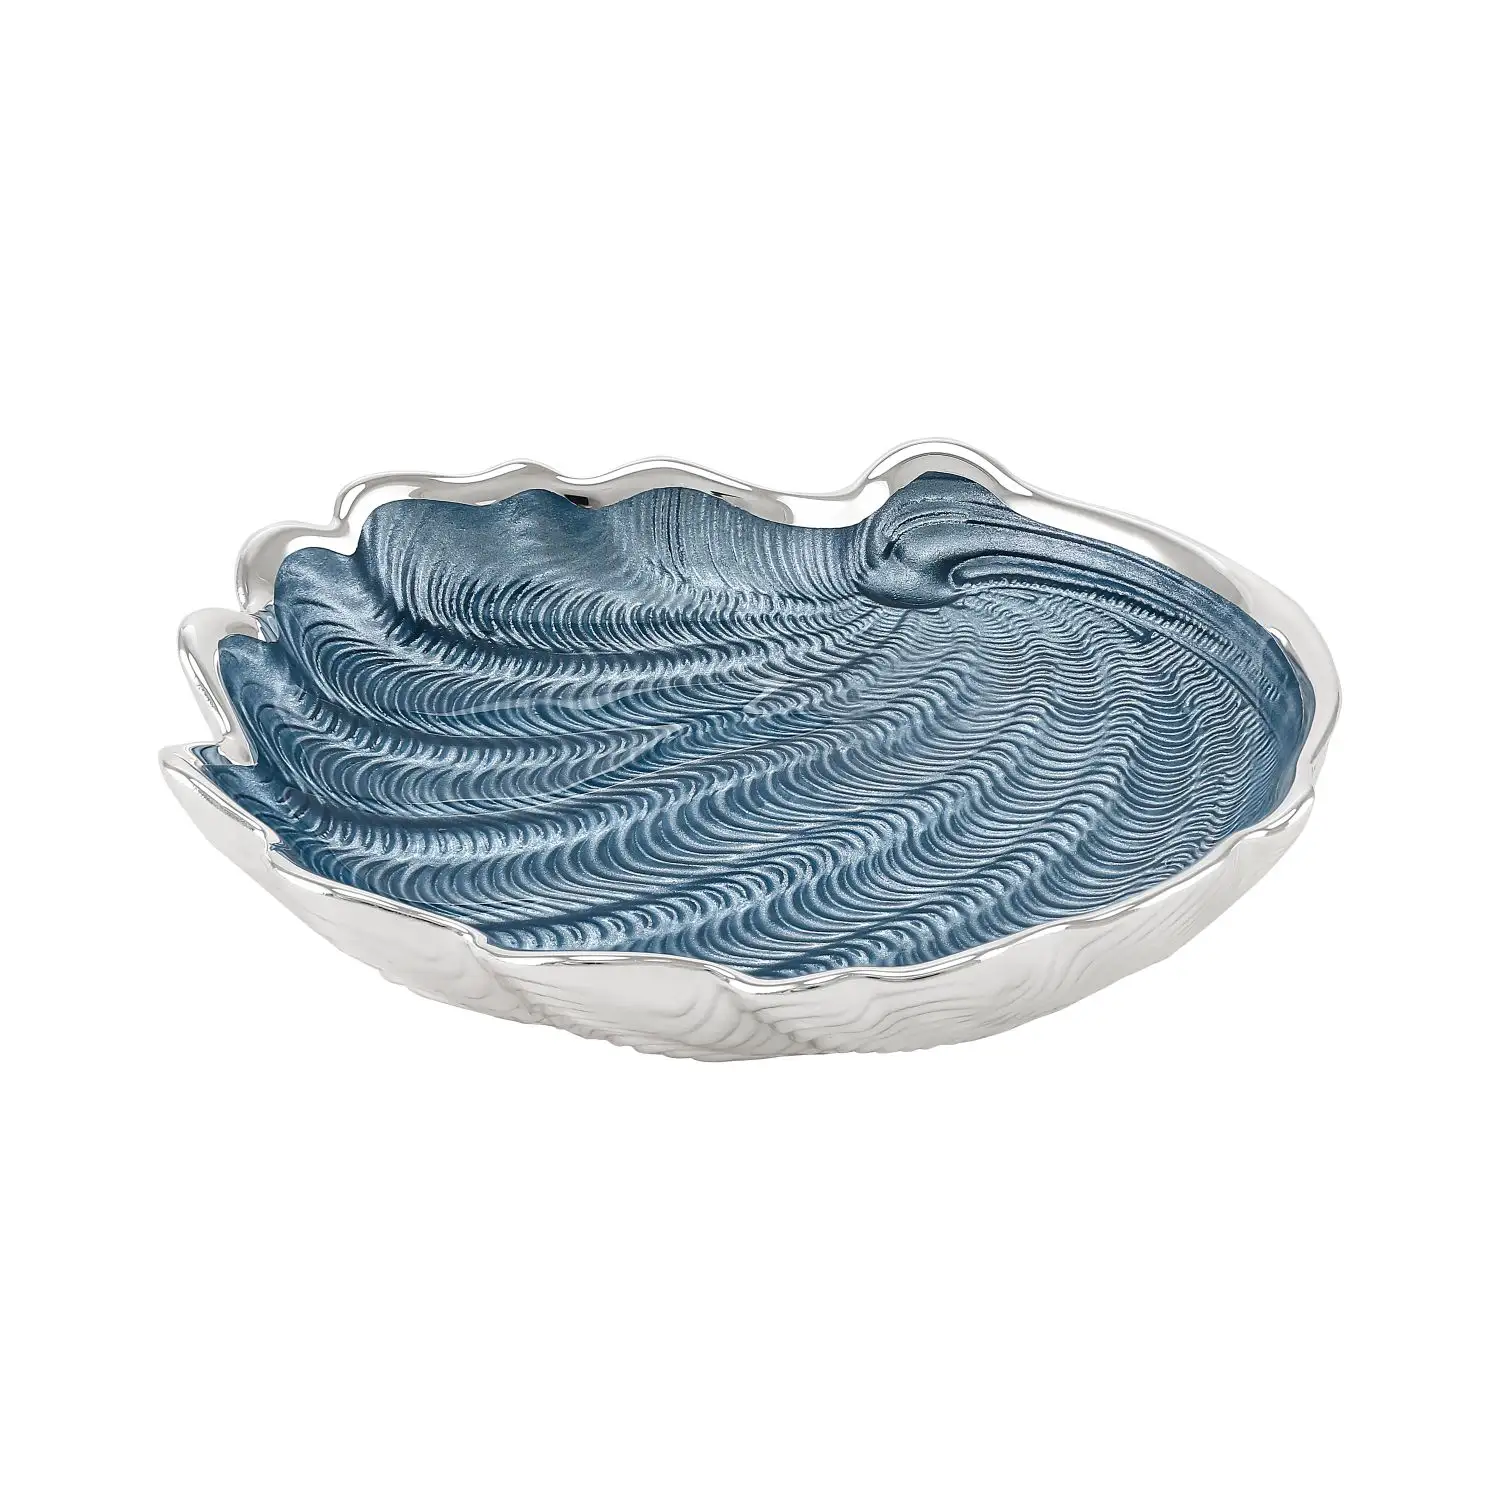 Тарелка стеклянная CONCHIGLIA (цвет небесно-голубой) диаметр 15 см тарелка стеклянная conchiglia цвет золотой диаметр 15 см